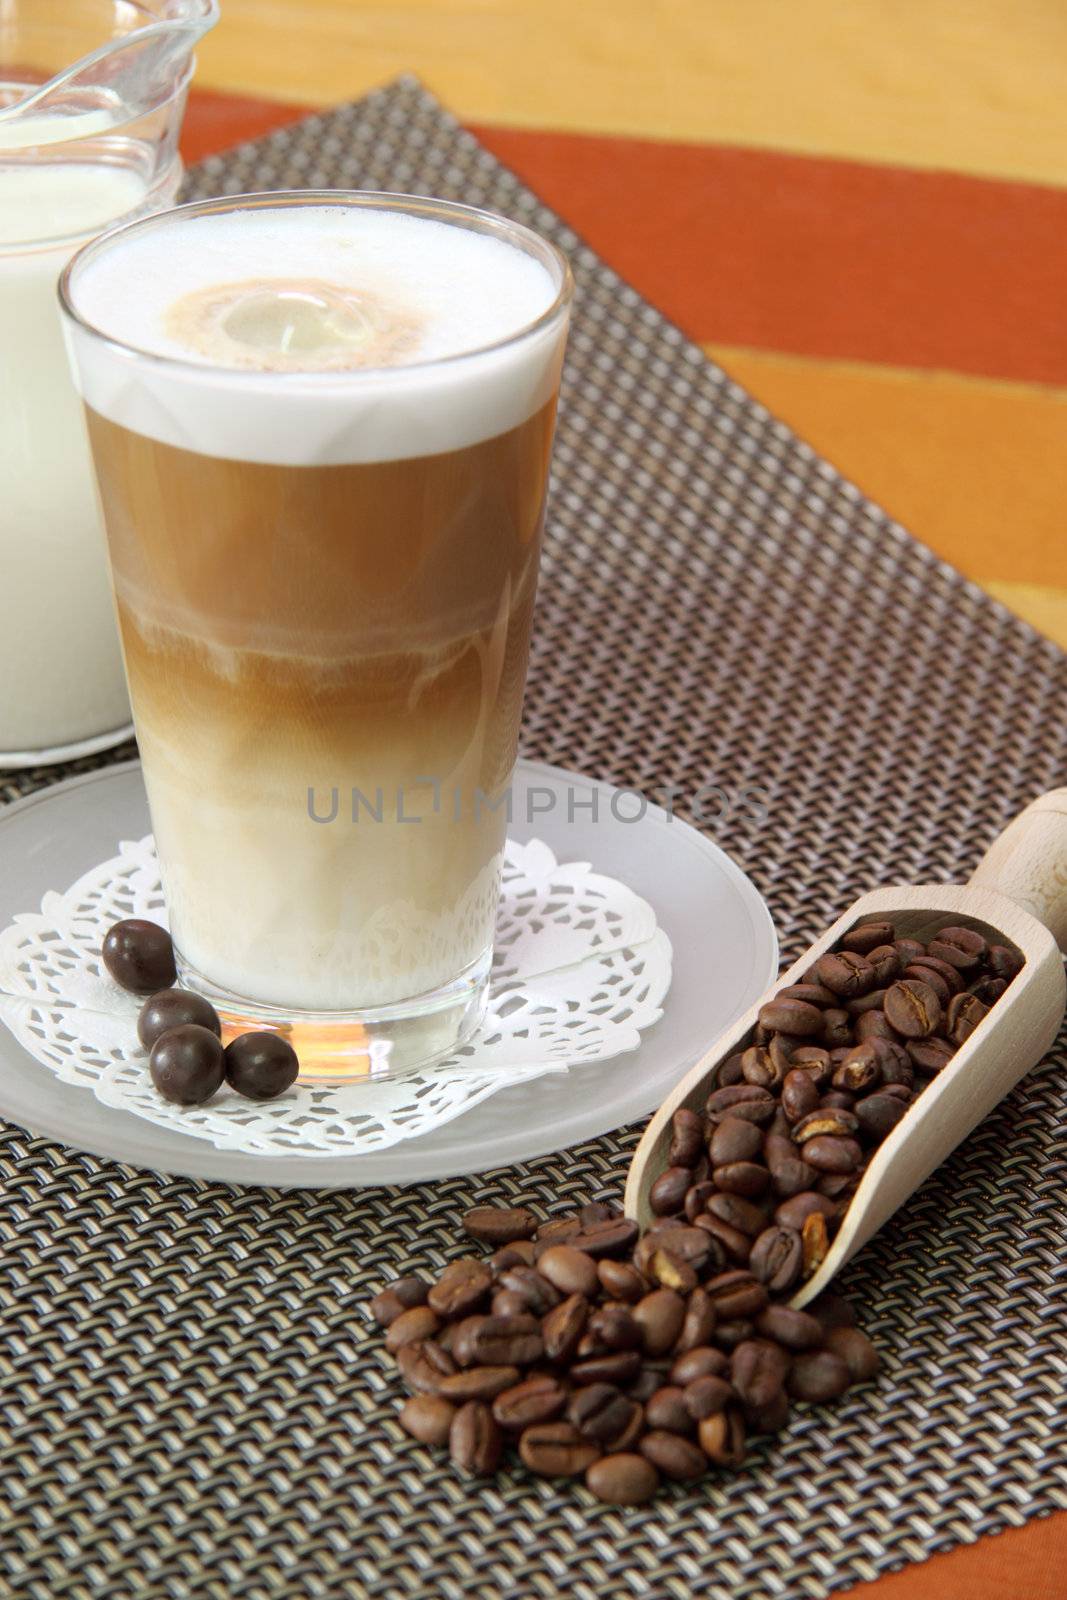 Latte Macchiato in glass with coffee grain on brown background
